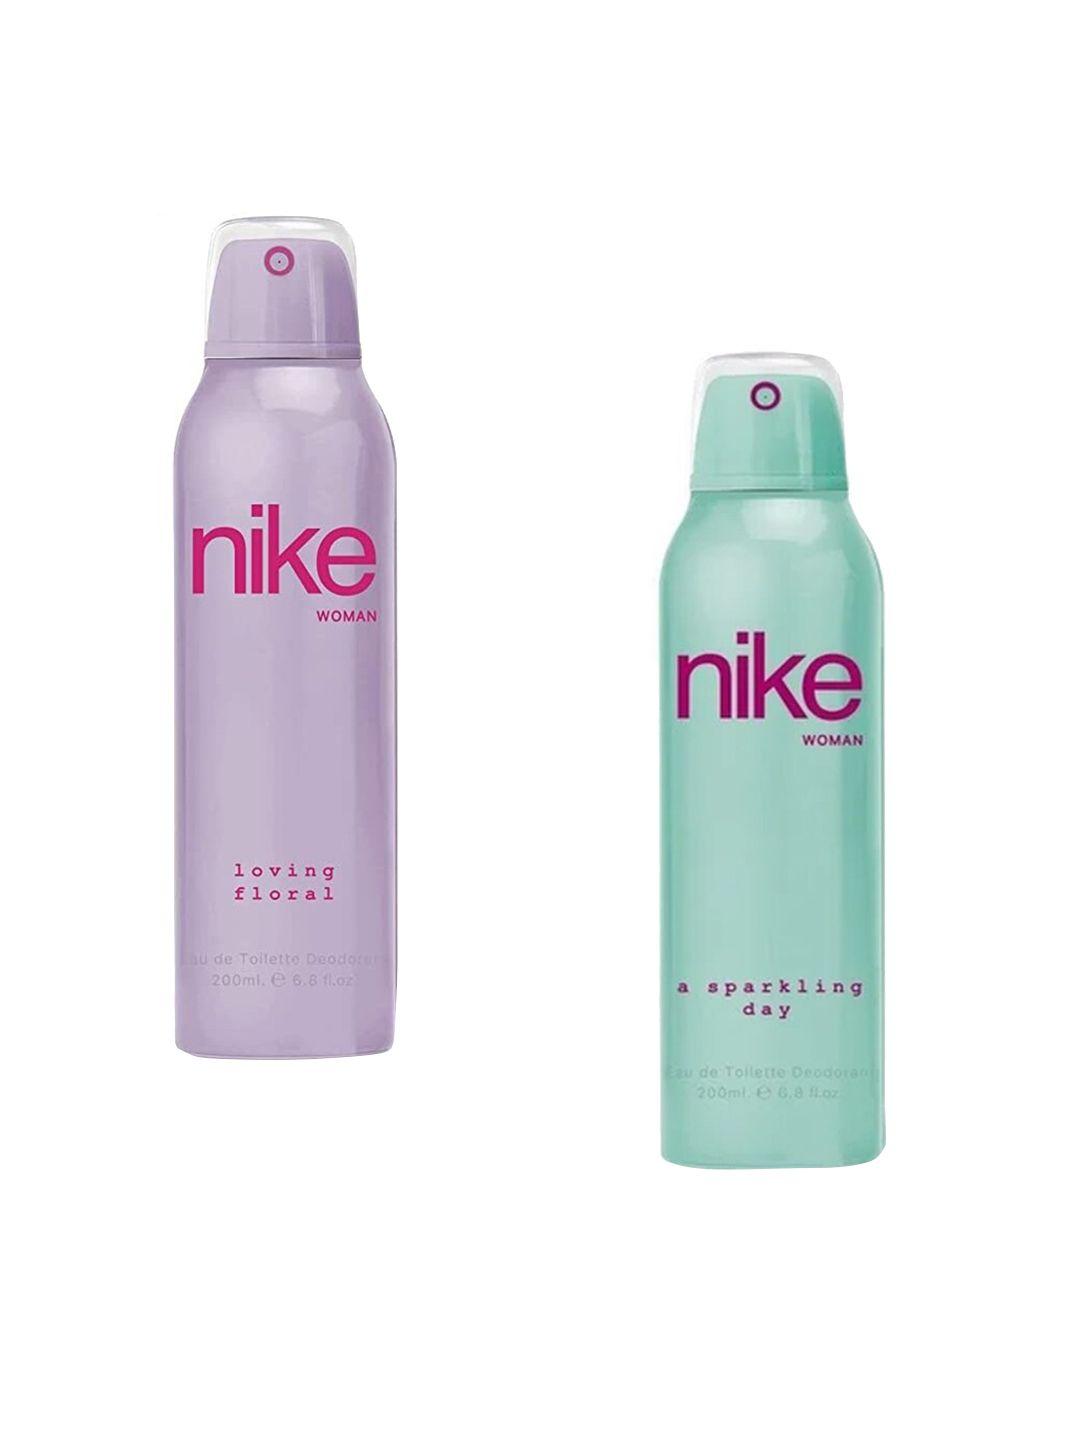 nike women set of 2 deodorants - a sparkling day & loving floral - 200ml each